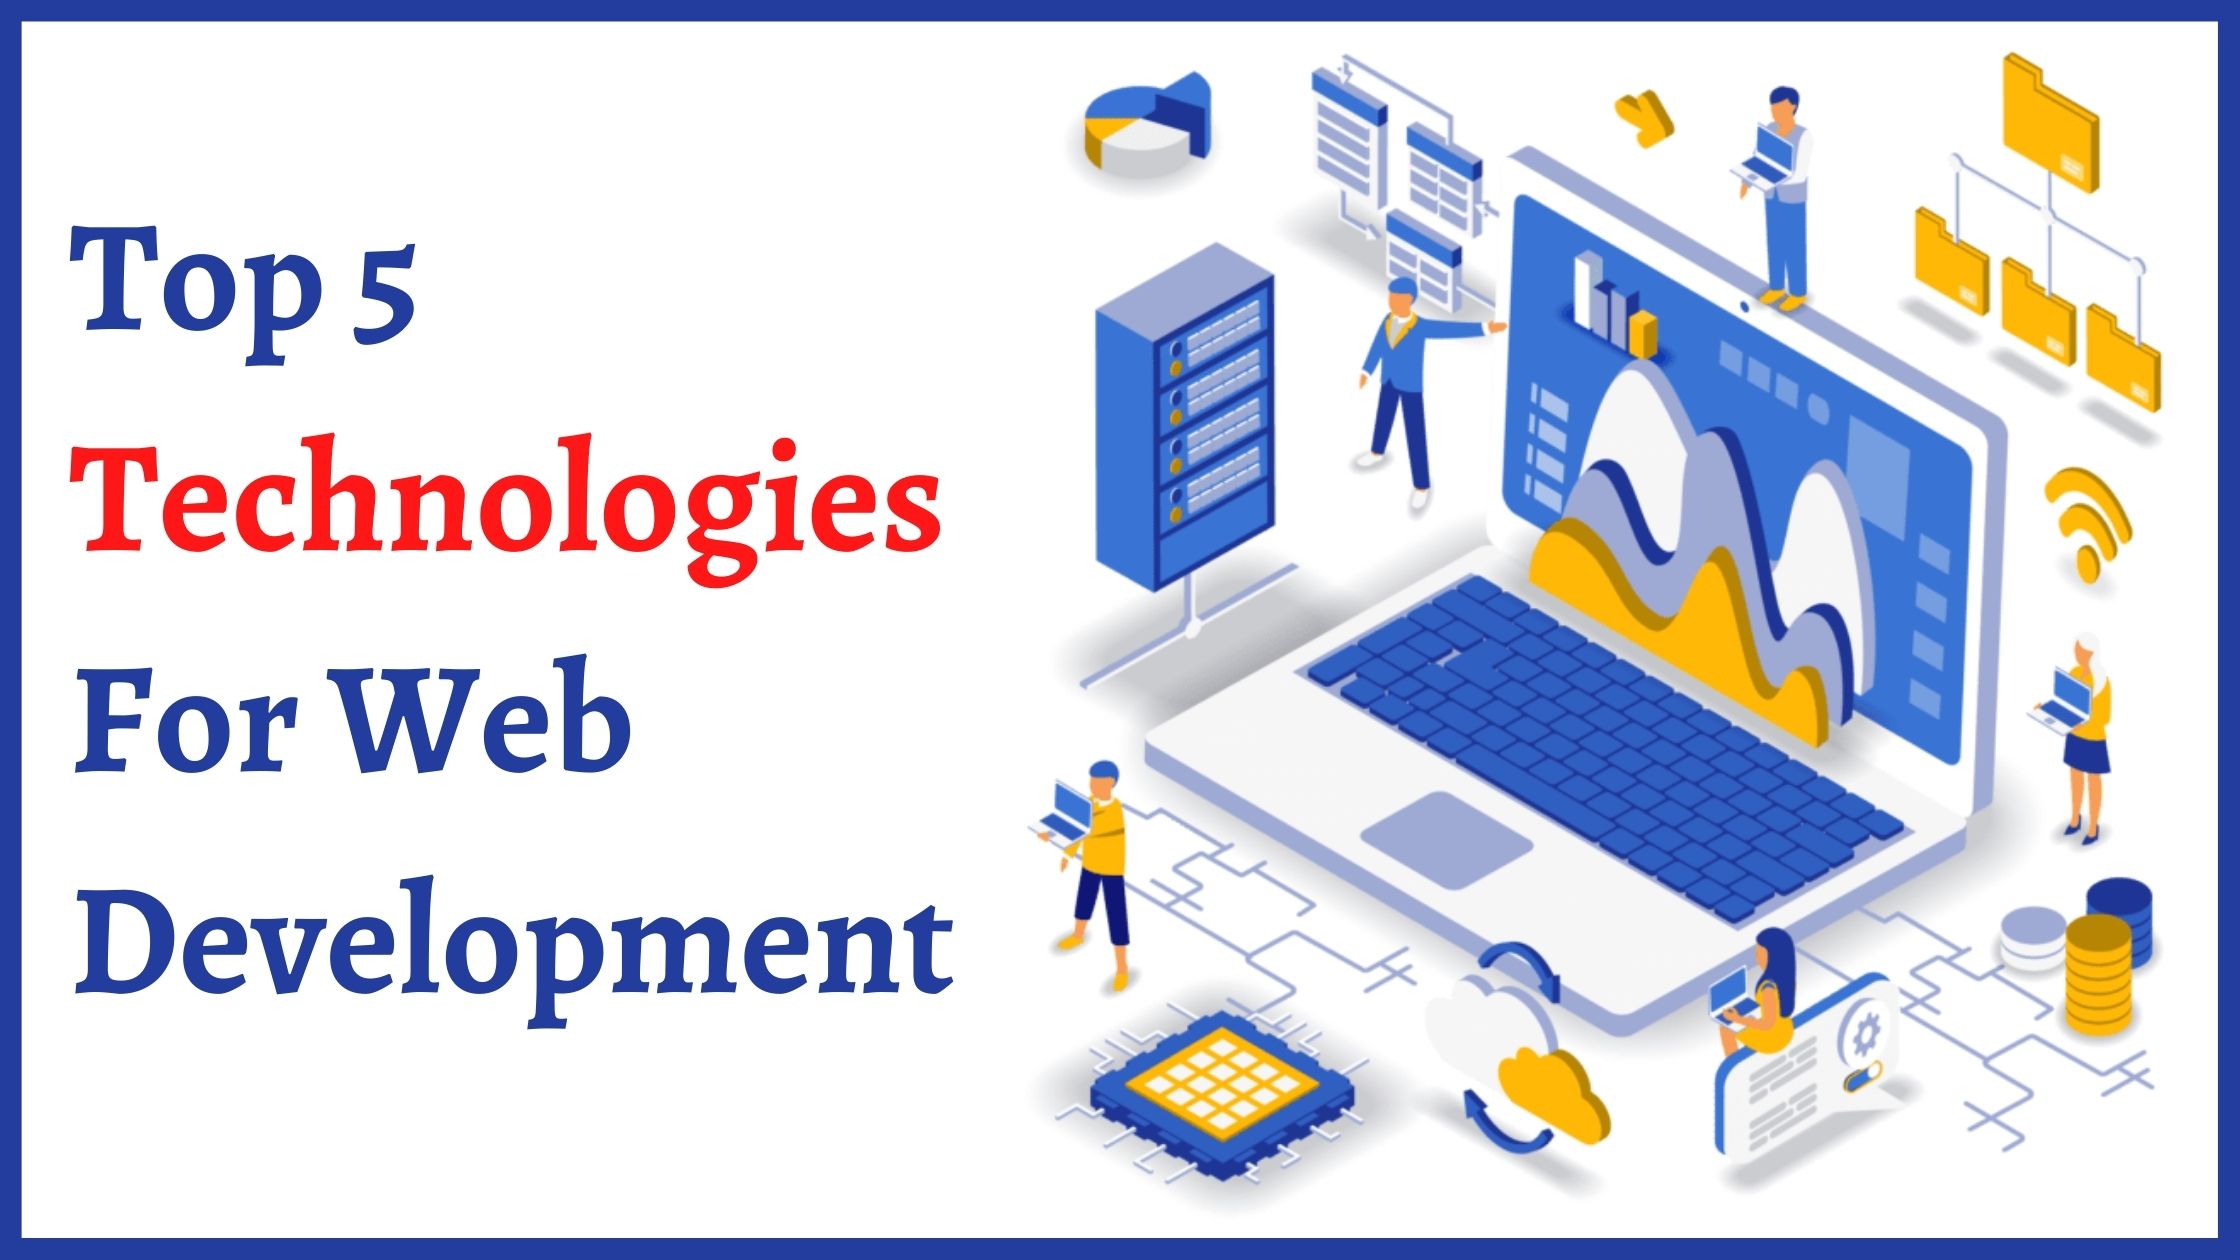 Top 5 Technologies For Web Development